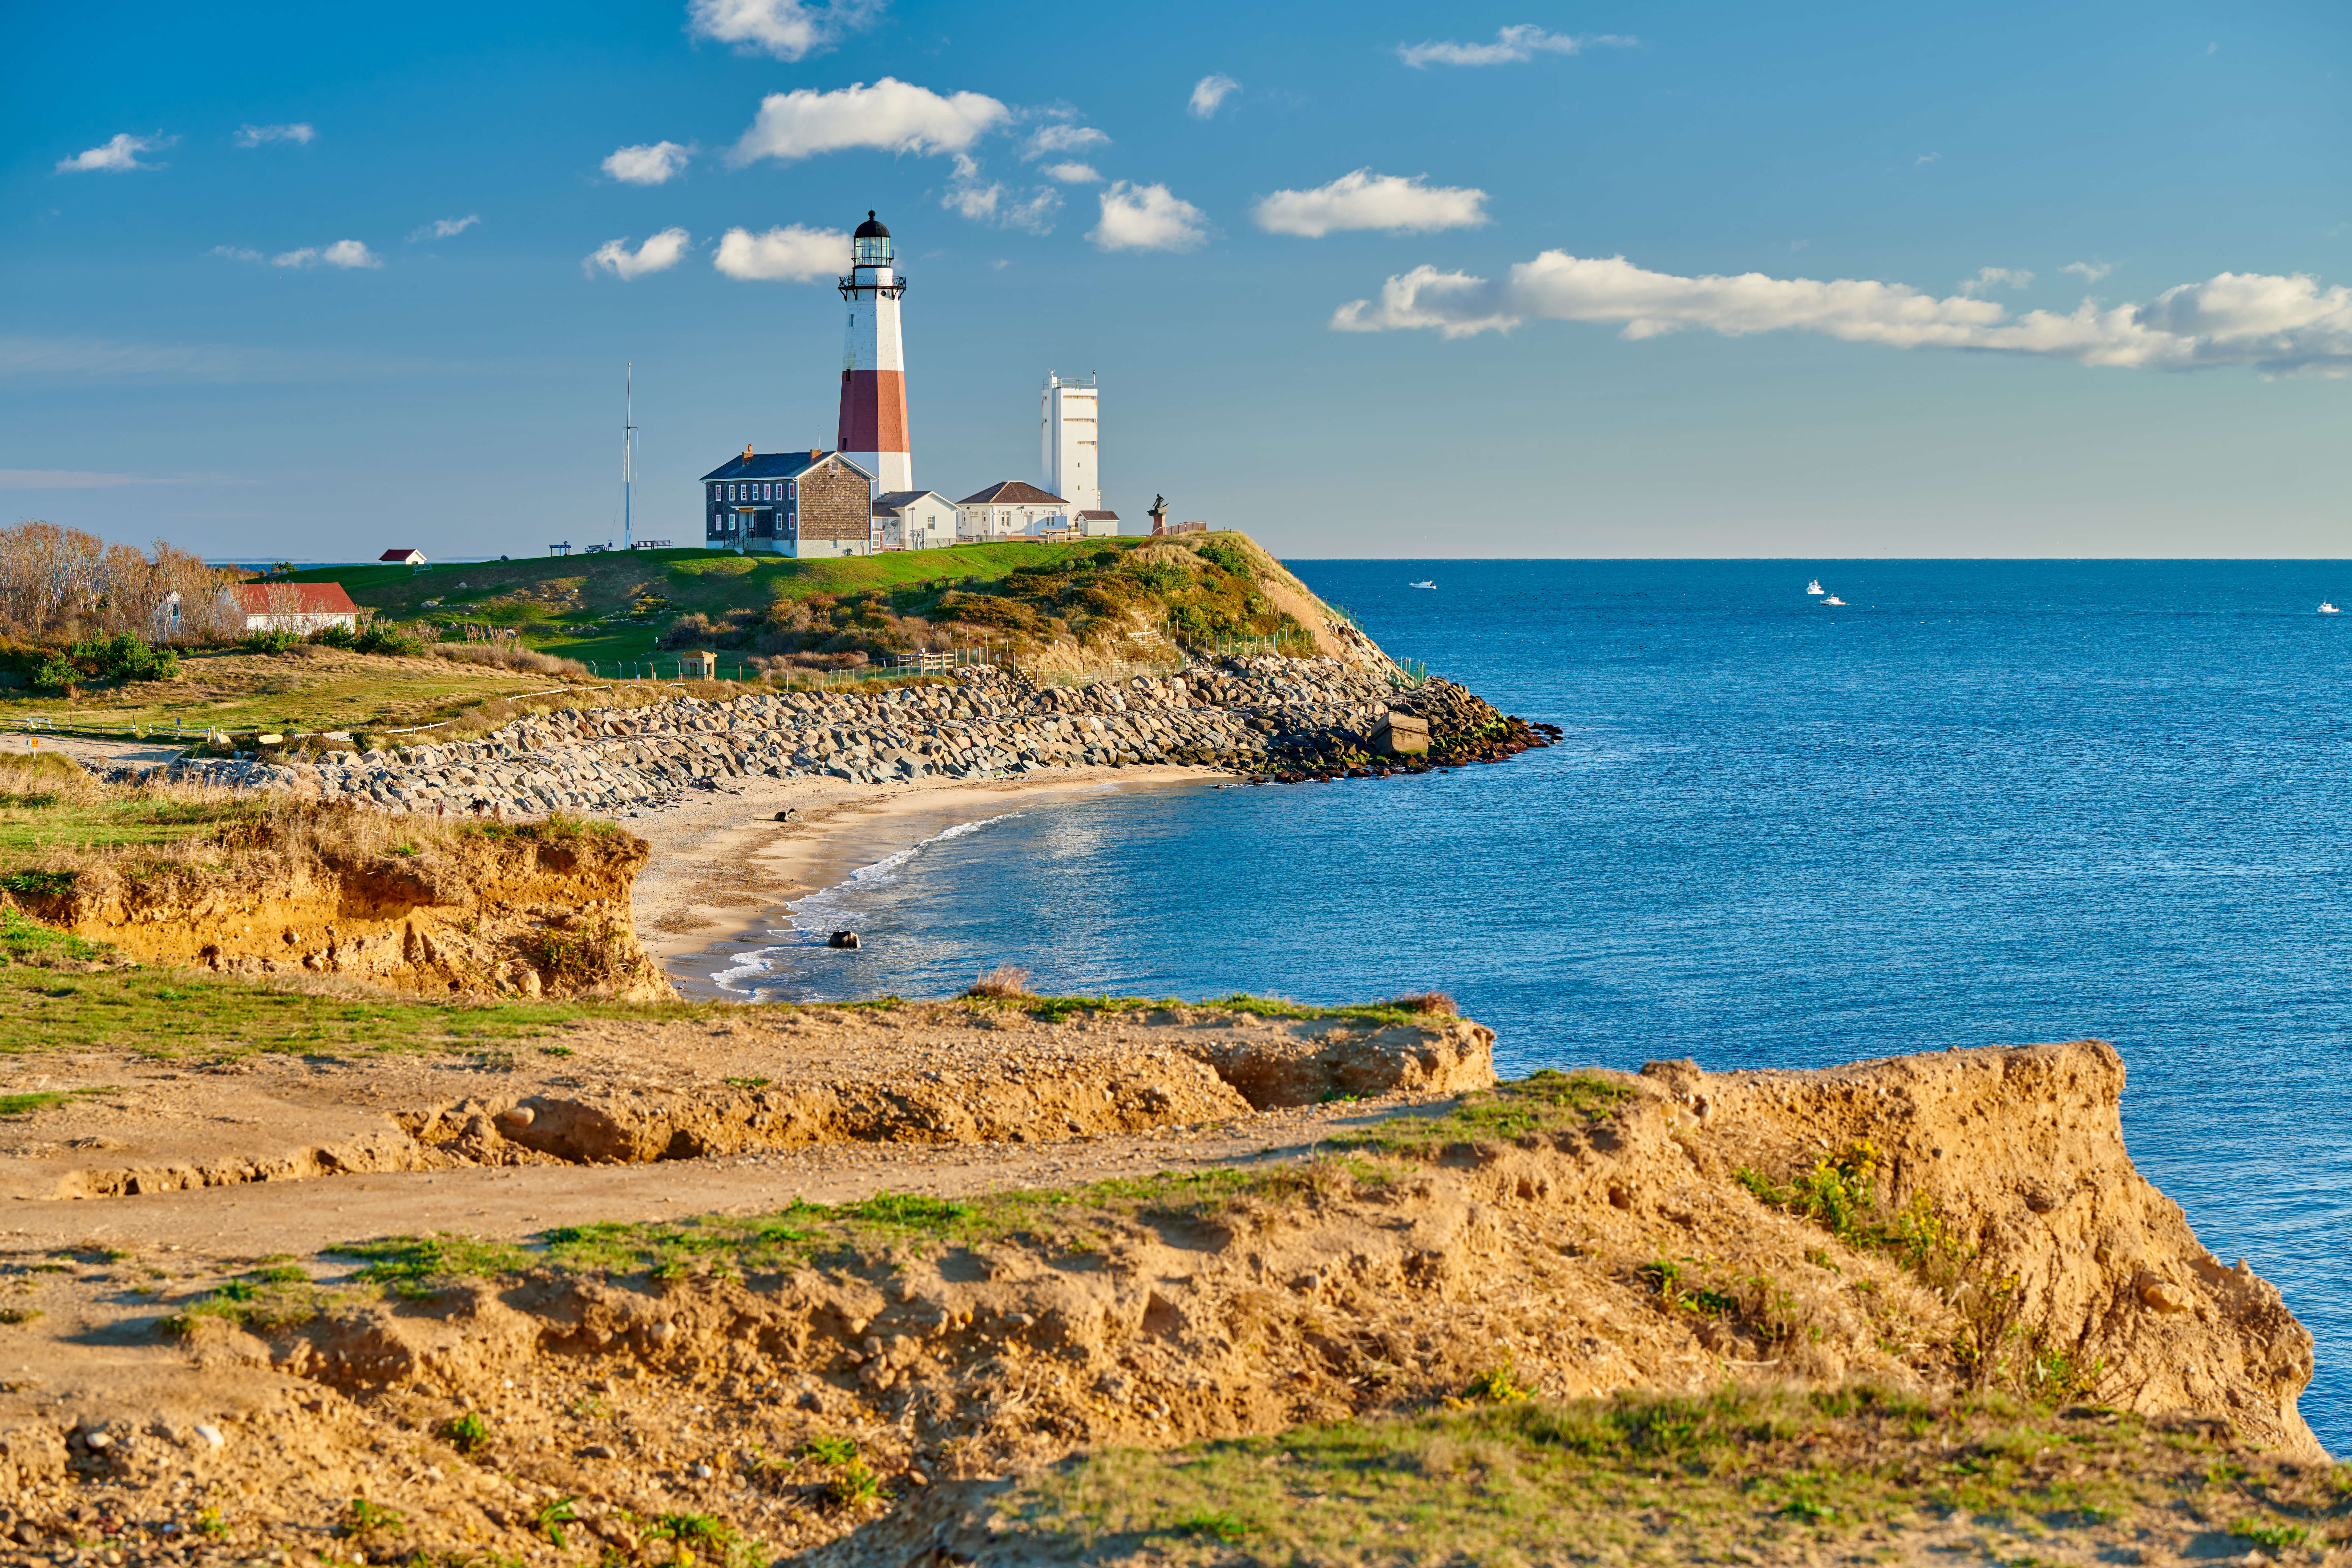 Lighthouse along the rocky coast of Long Island.